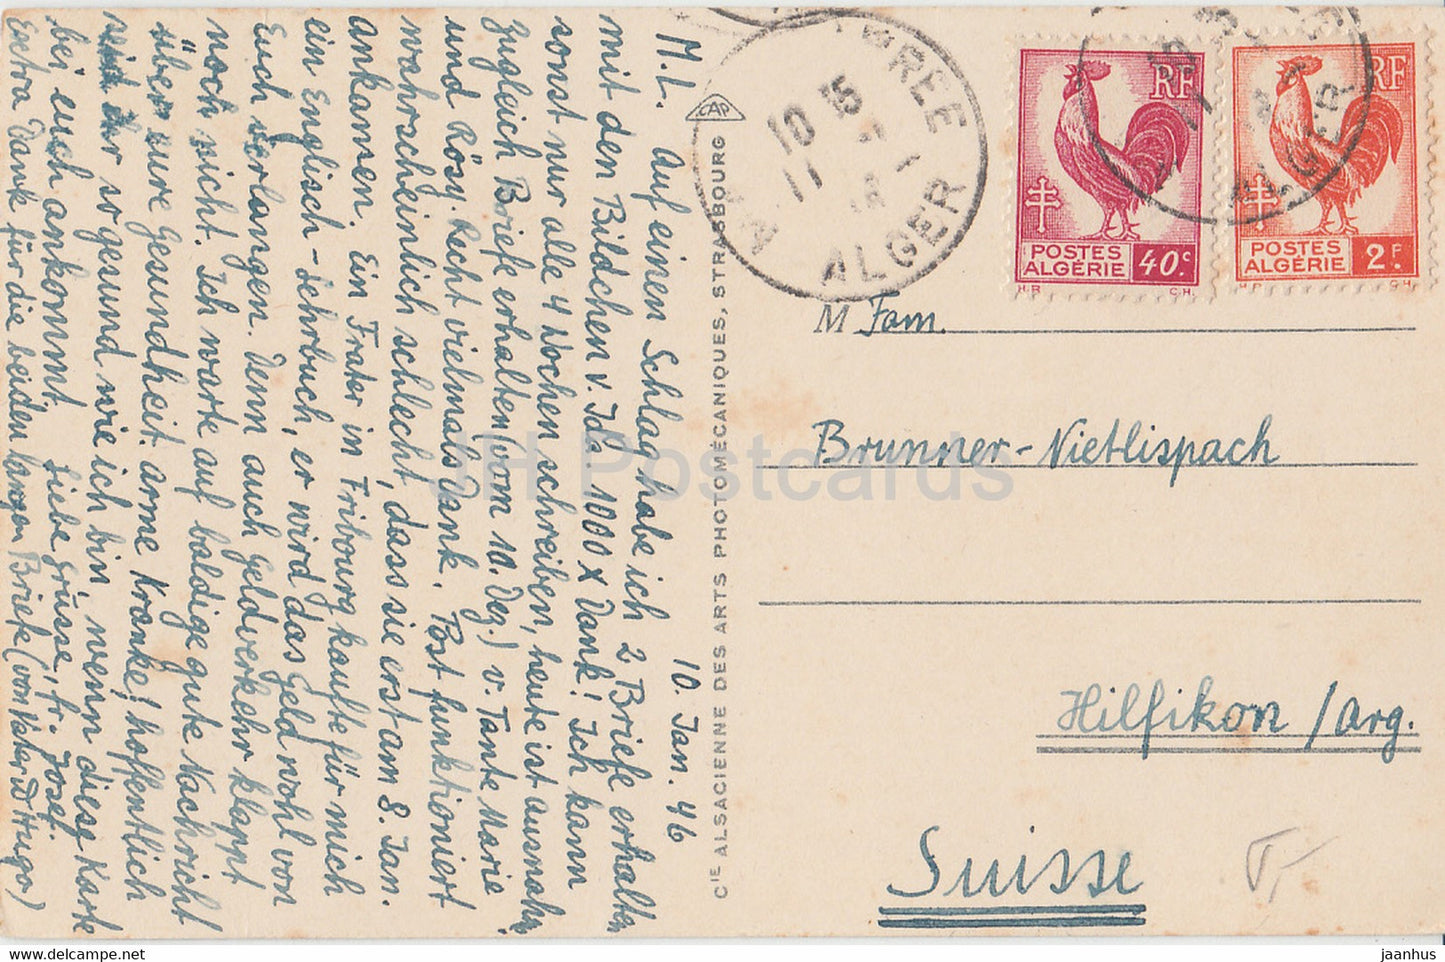 La Priere du Soir - 1262 - old postcard - 1946 - Algeria - used